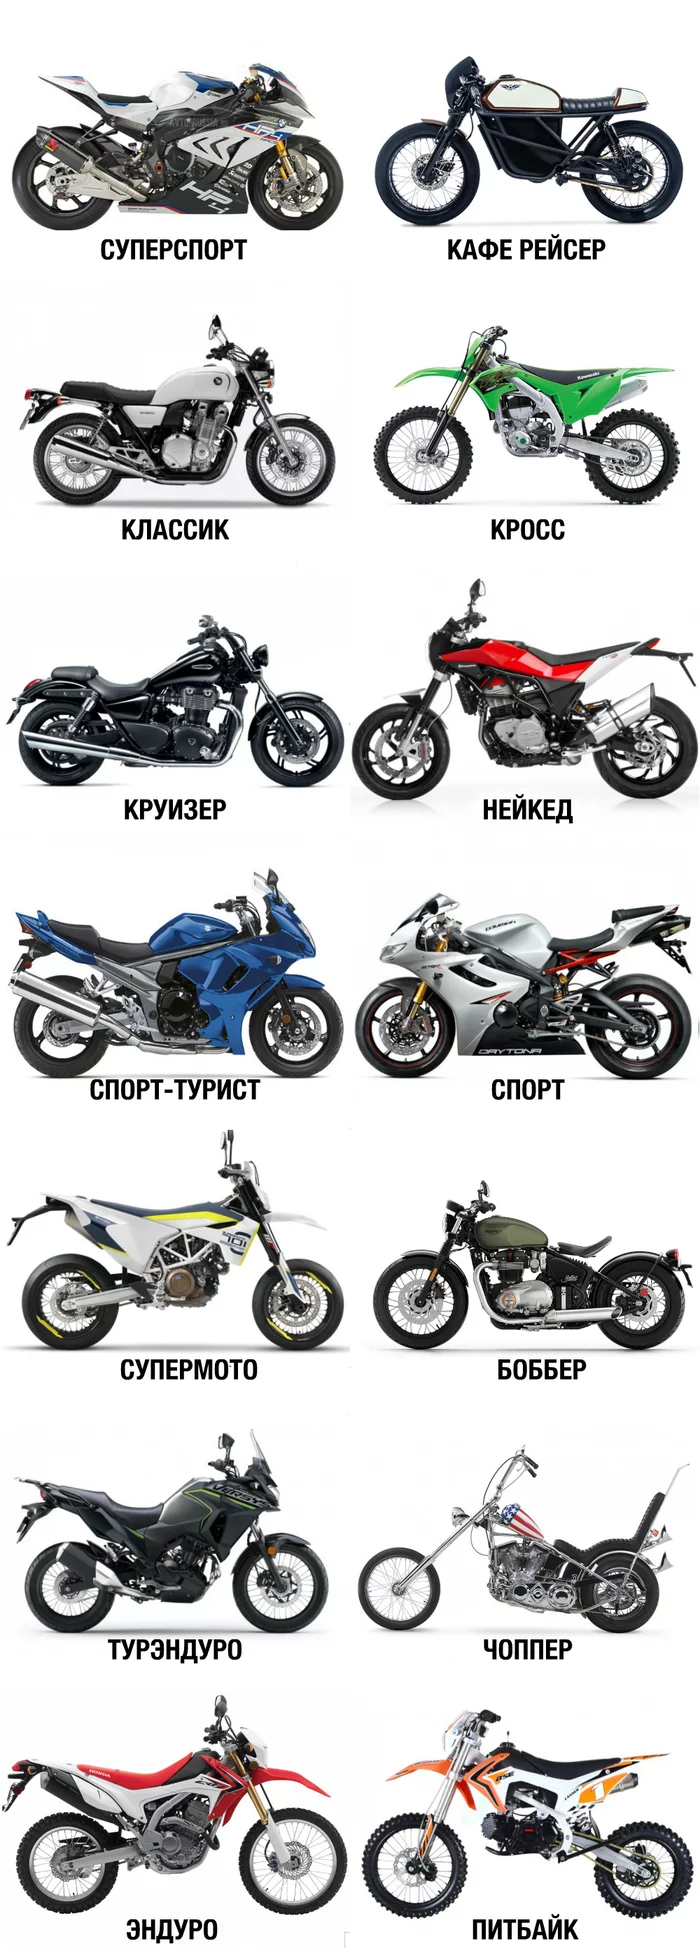 все виды мотоциклов фото